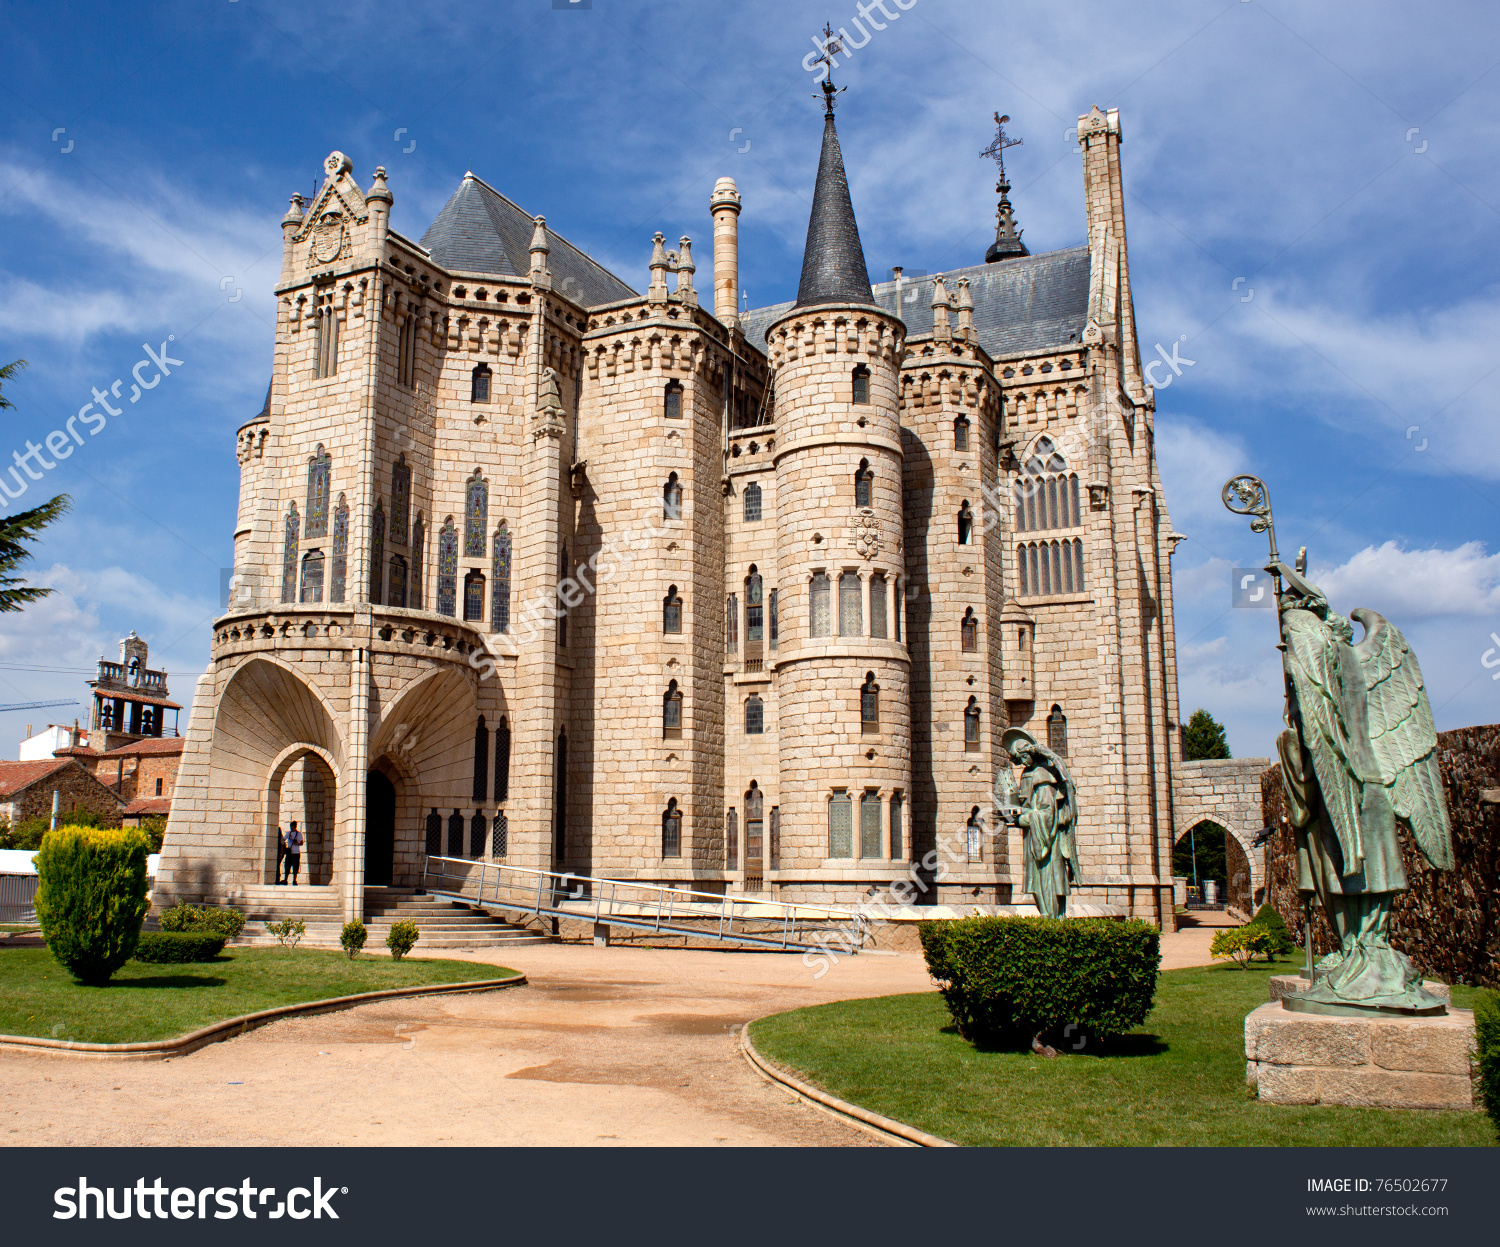 The Episcopal Palace, Modernisme Edifice In Astorga Stock Photo.